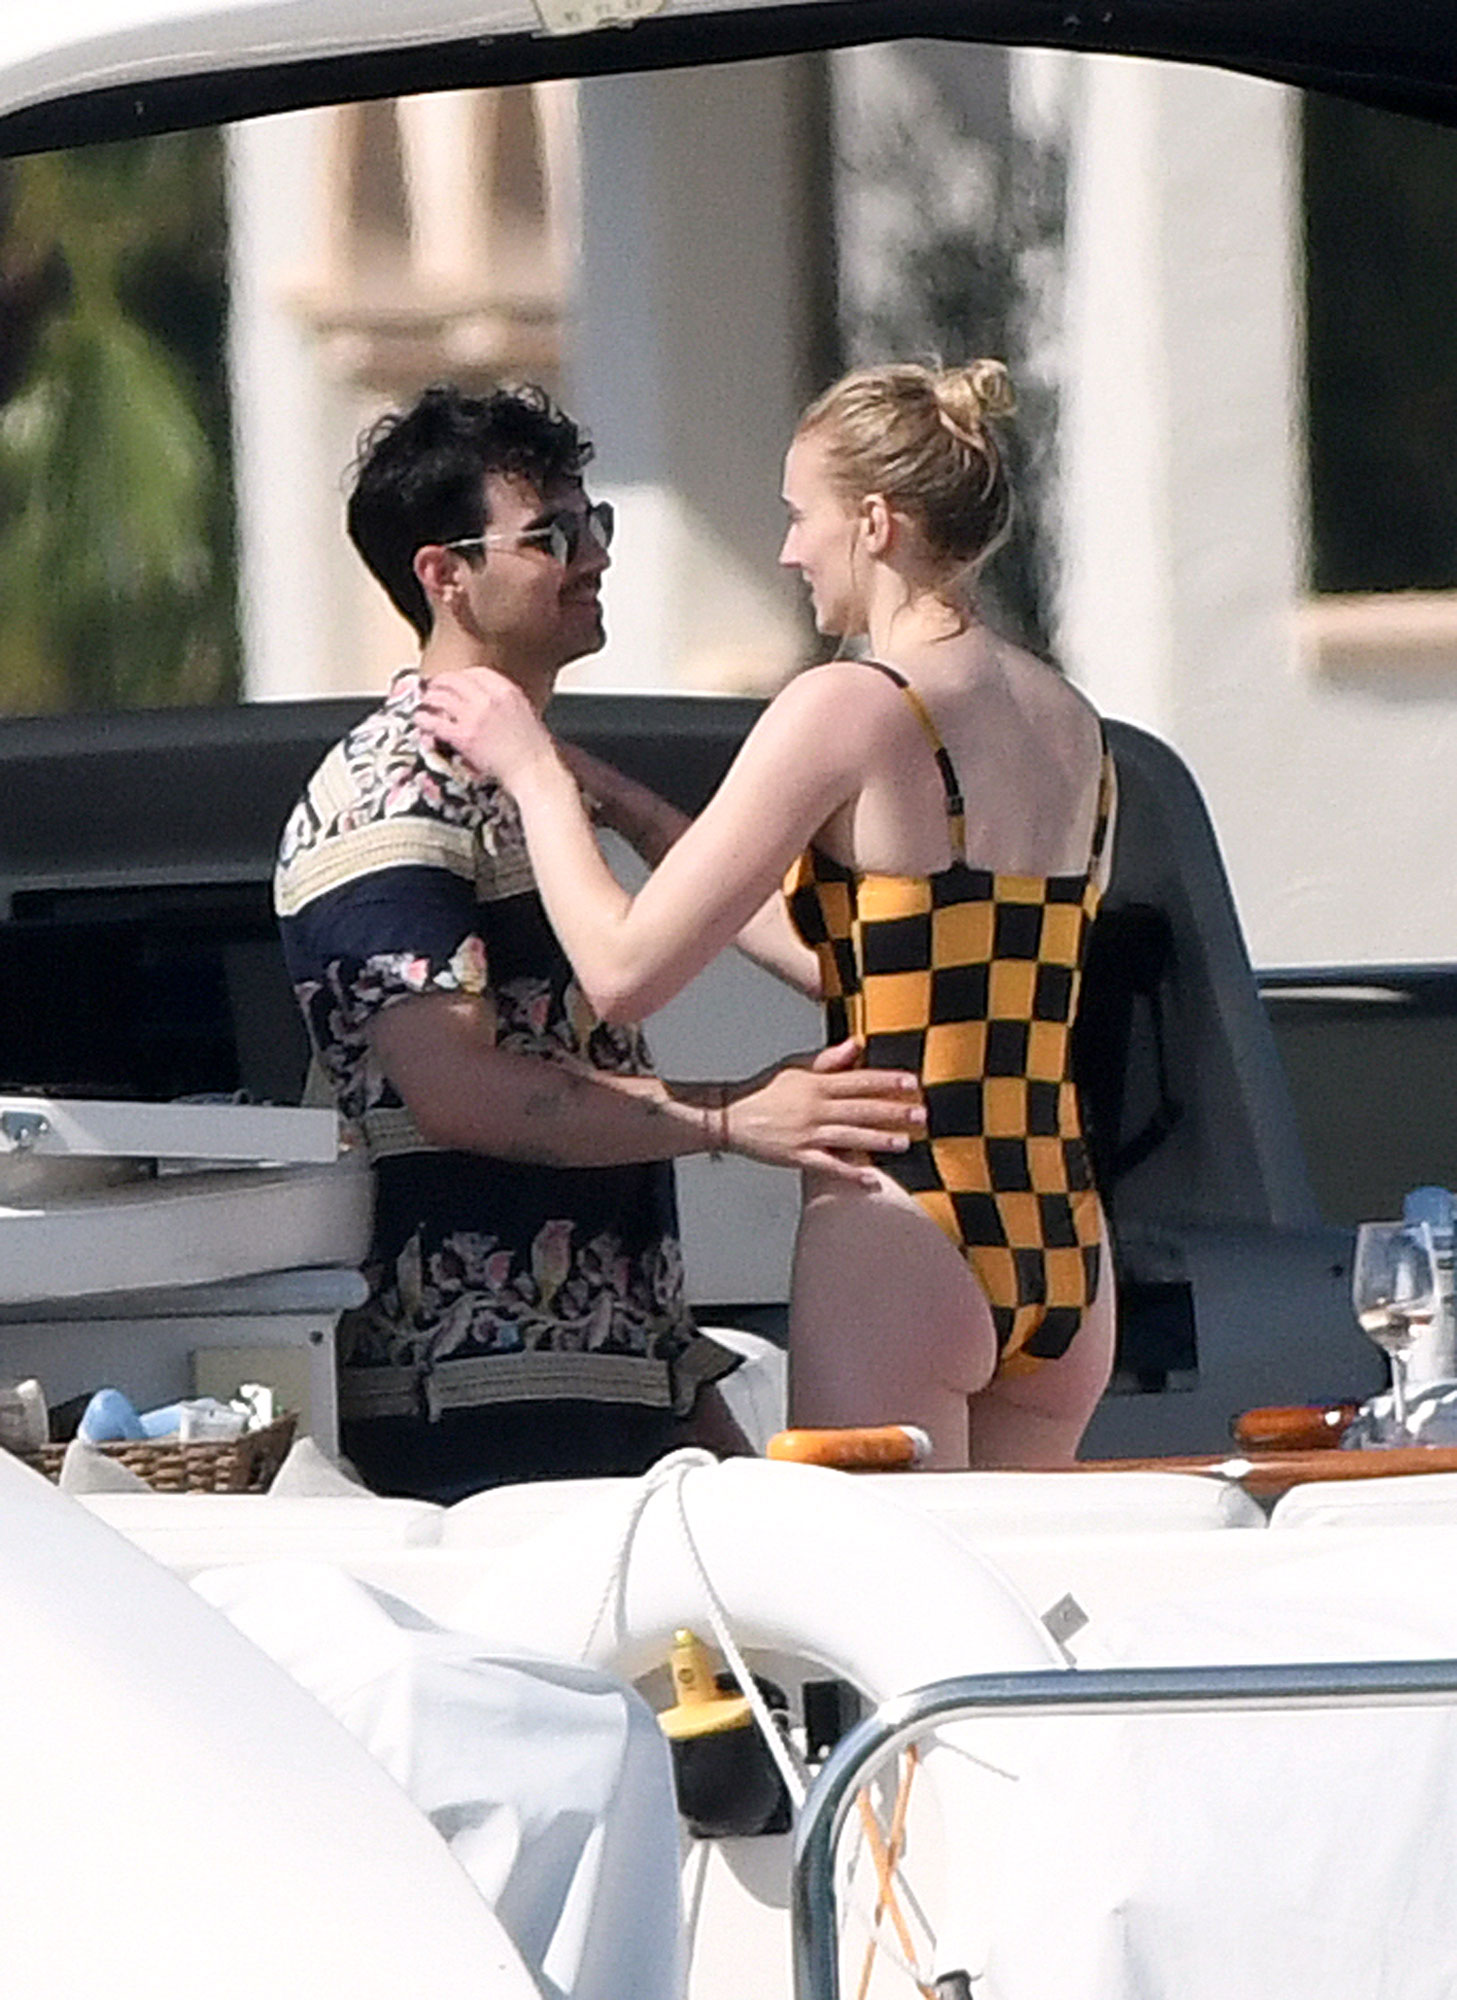 Priyanka Chopra, Sophie Turner Dance to 'Sucker' On Yacht, Ride Jet Skis on Miami Trip With Jonas Brothers